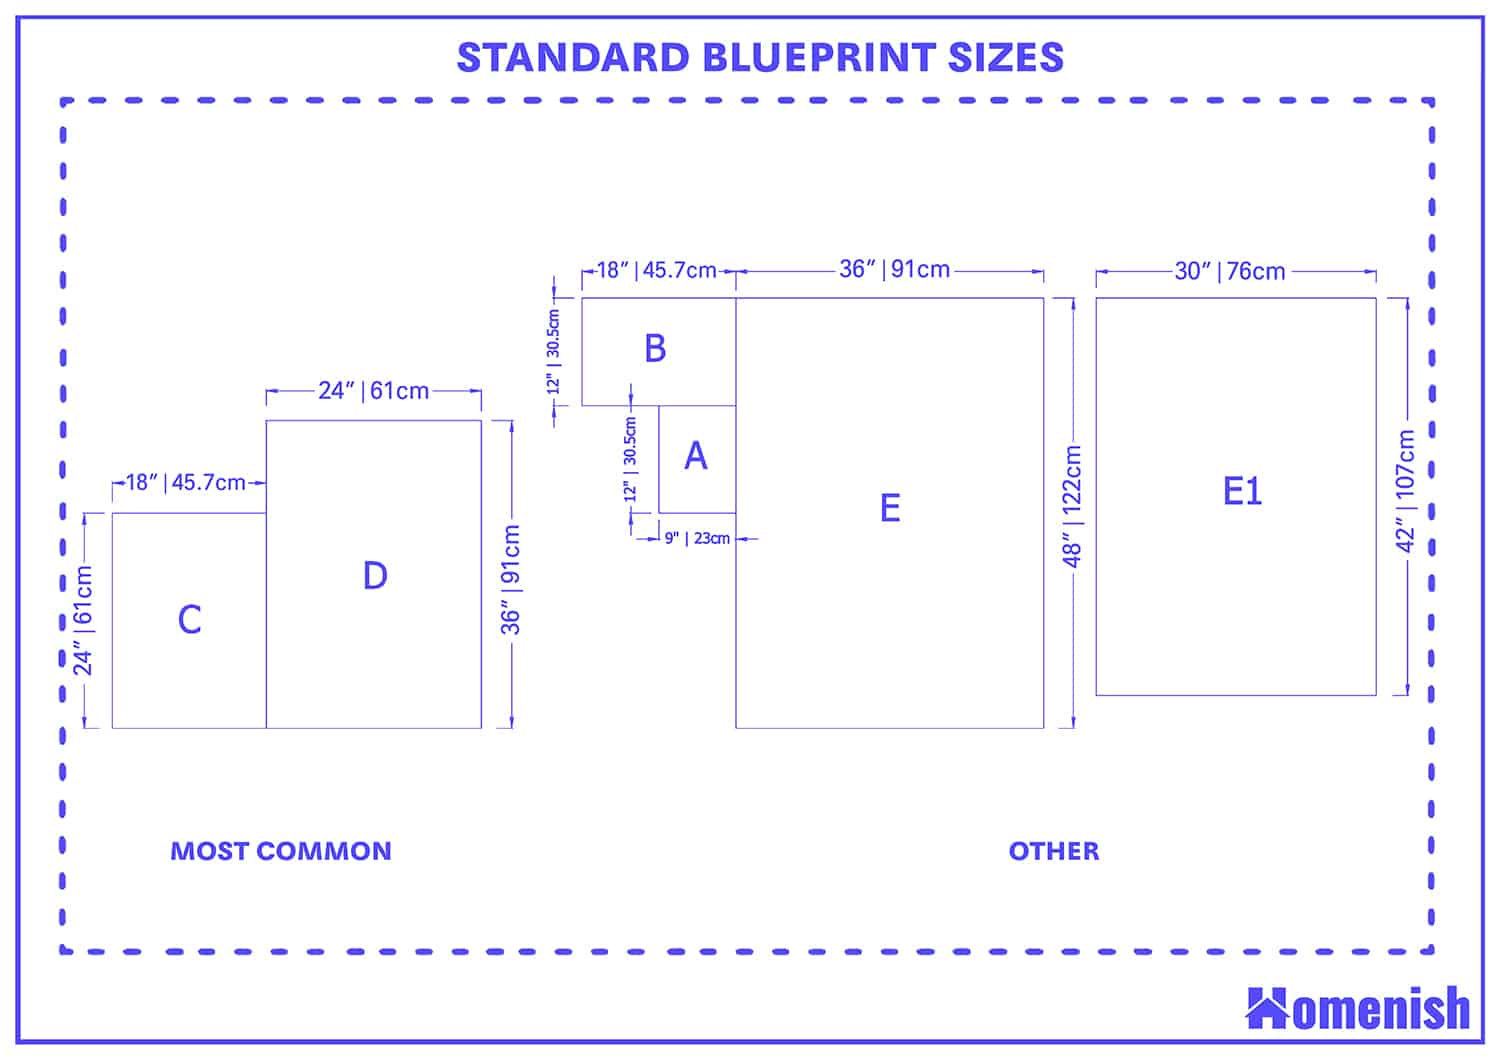 Standard Blueprint Sizes